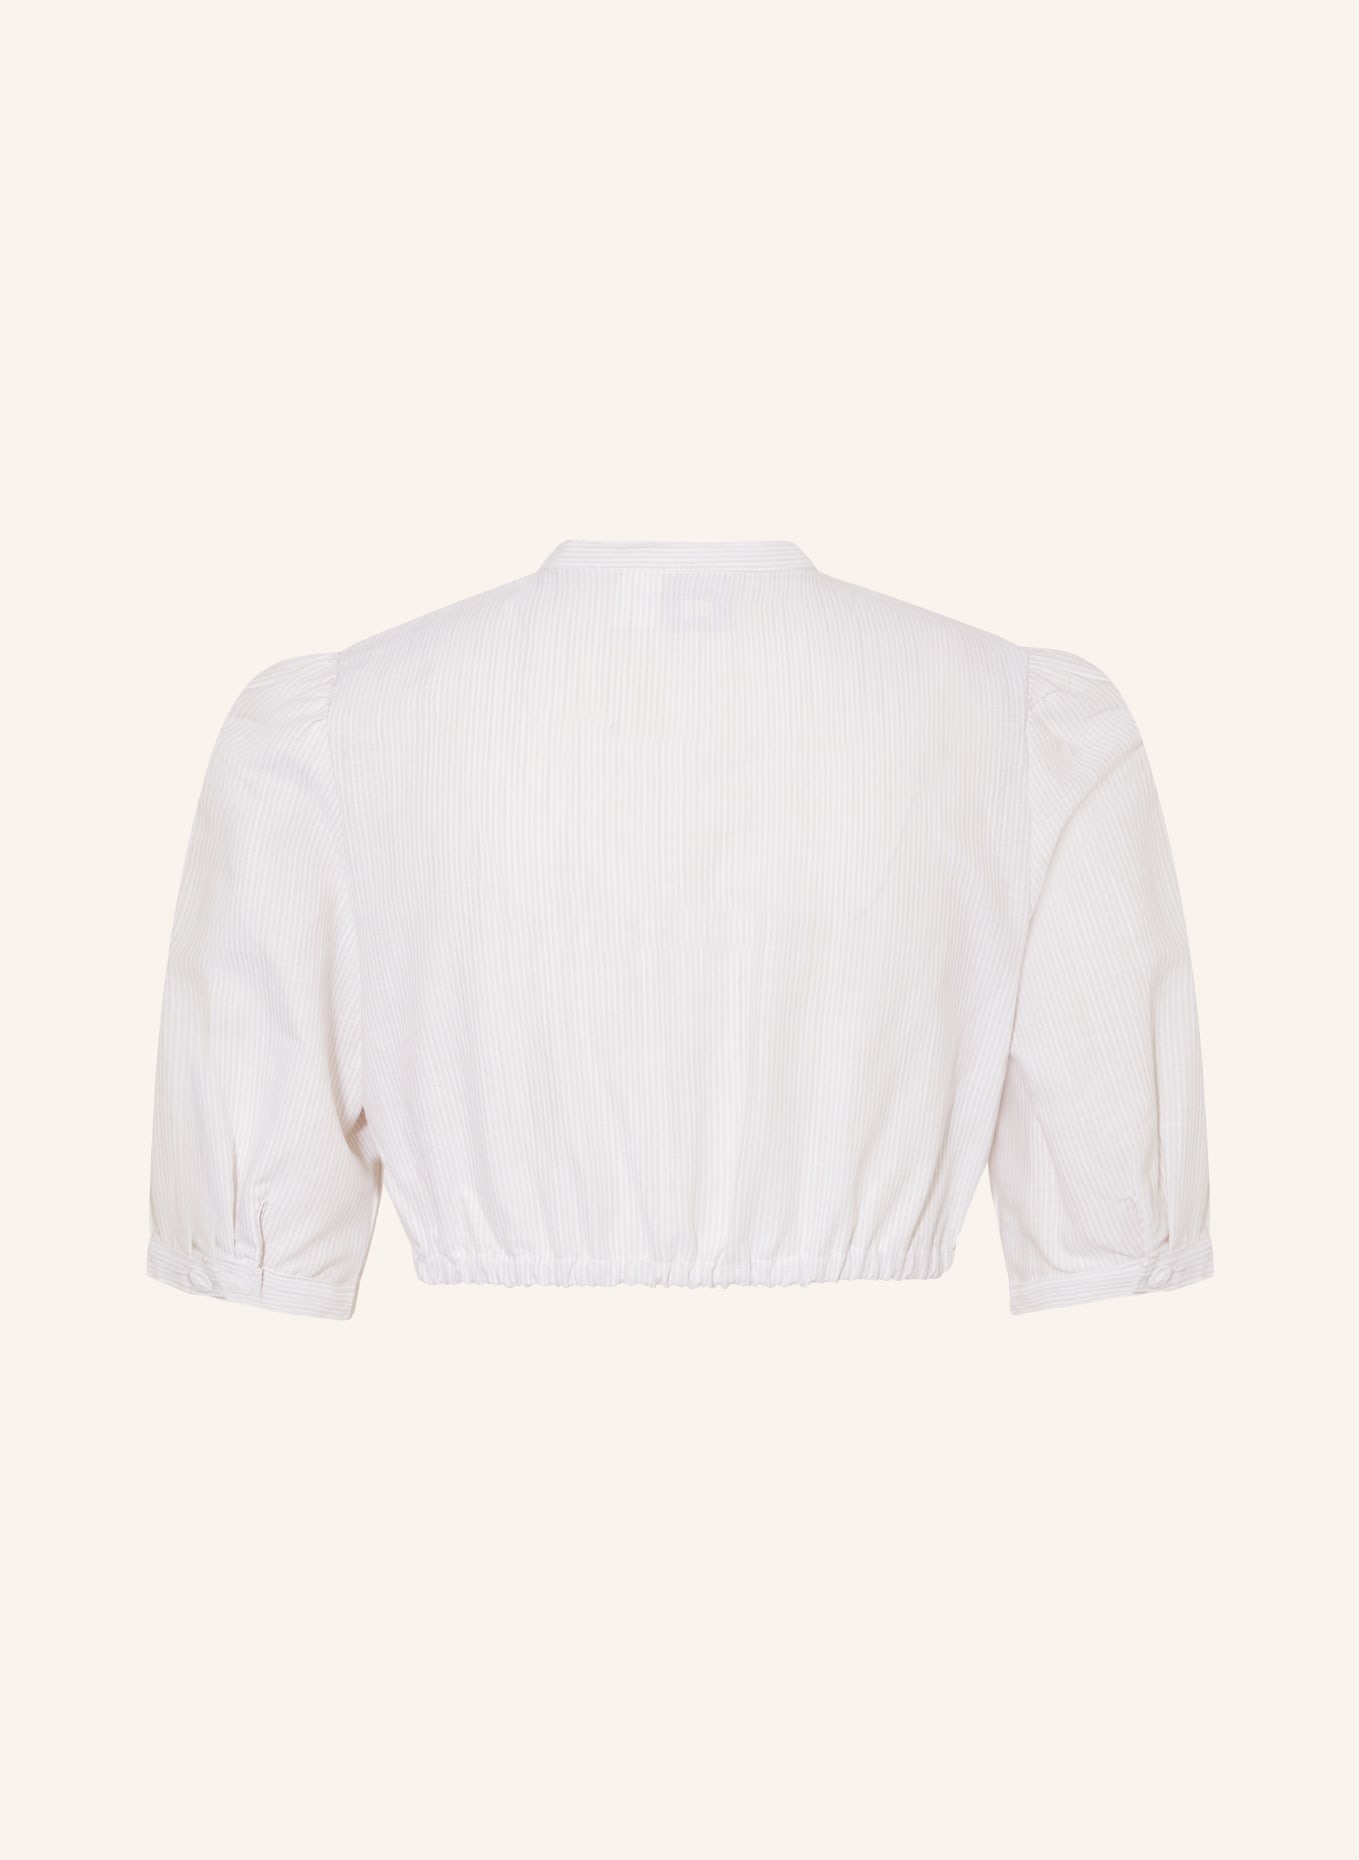 Hammerschmid Dirndl blouse BRITTA, Color: CREAM/ LIGHT BROWN (Image 2)